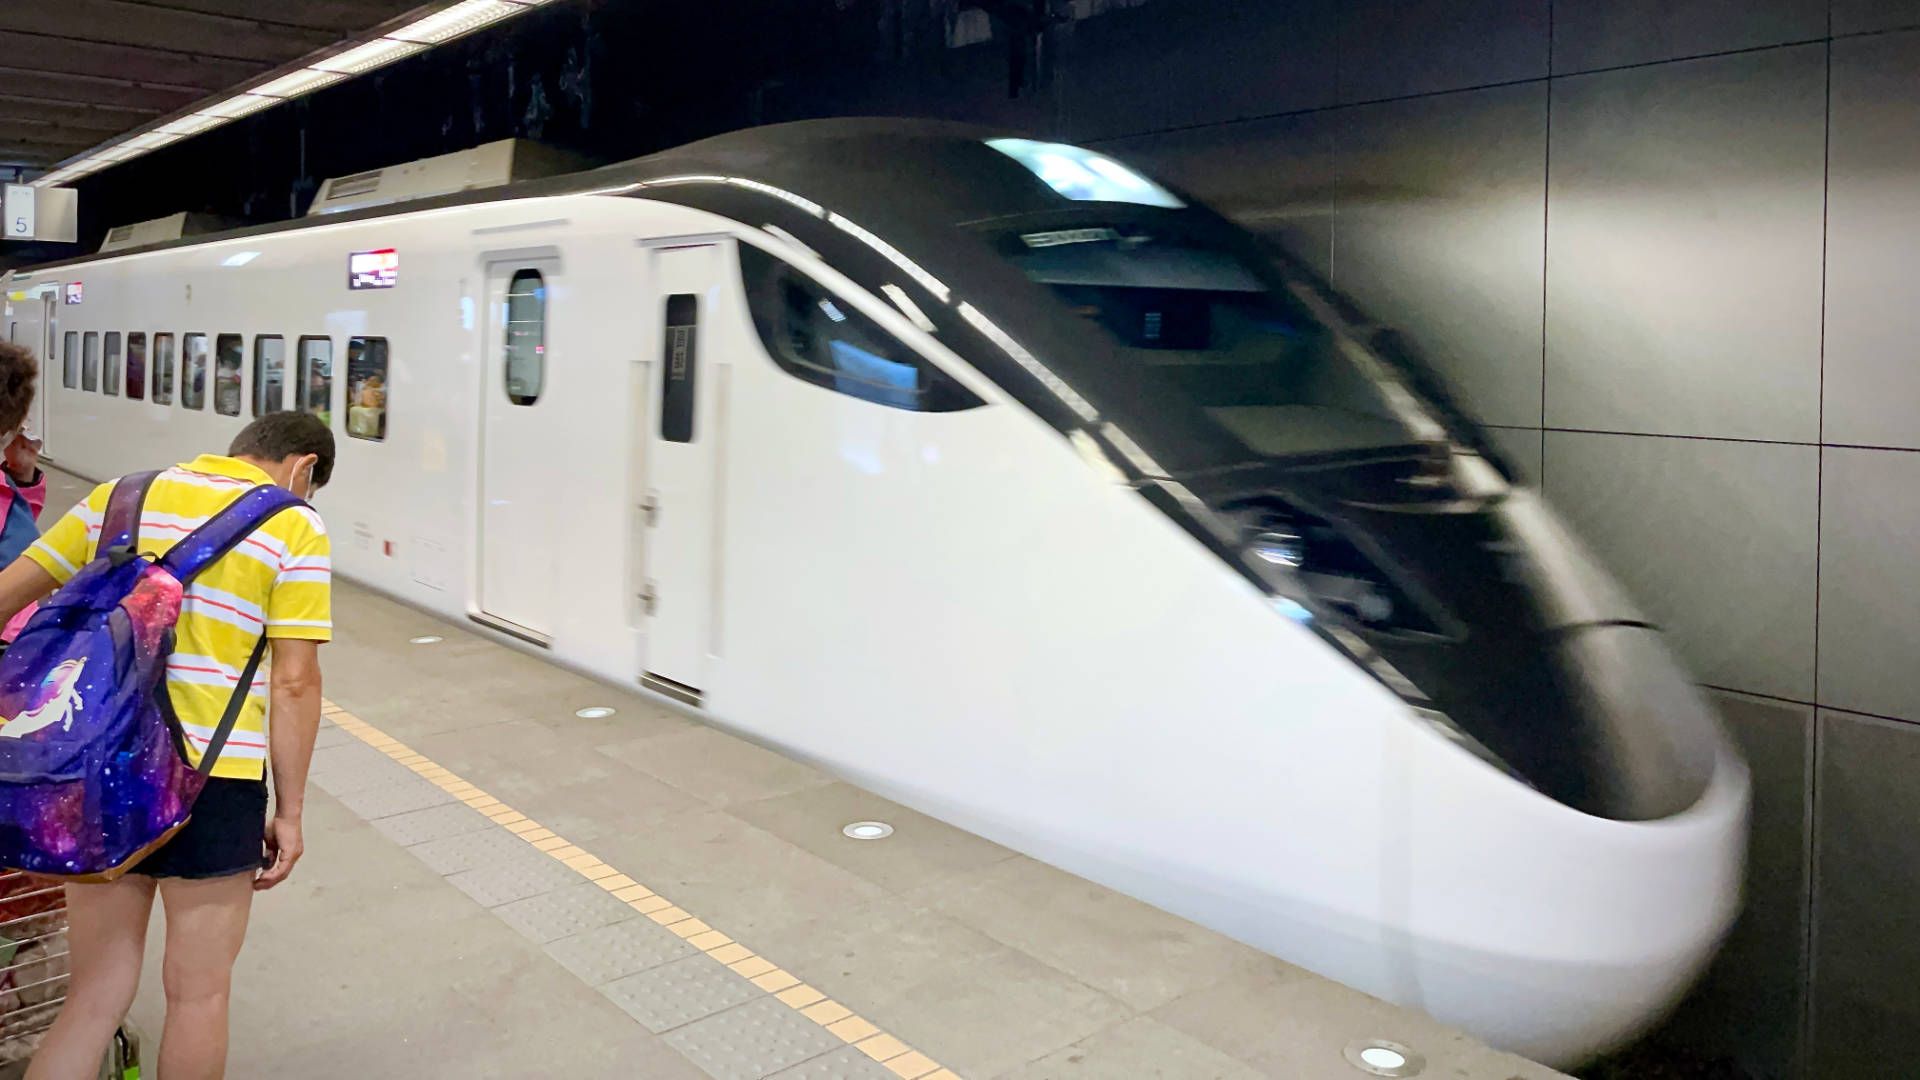 A sleek-looking train arriving at an underground platform.